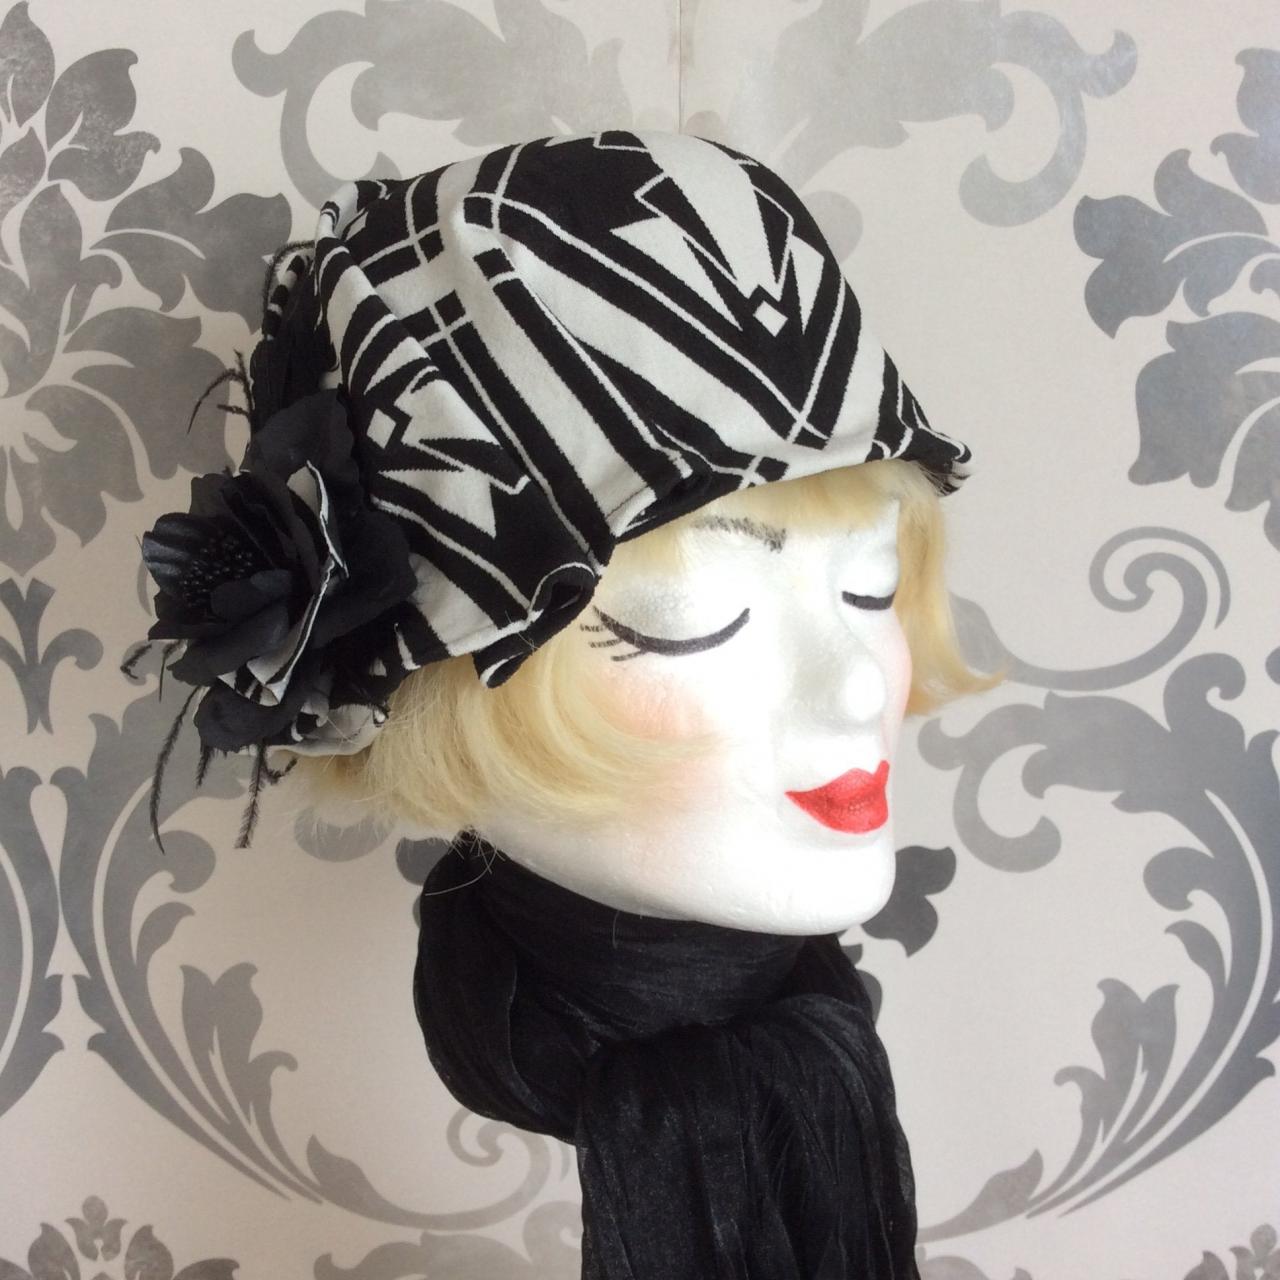 Elegant bell cap cloche 20's vintage art deco black white ascot cap hat headpiece headpiece flapper charleston gatsby felt derby, 50s 60s